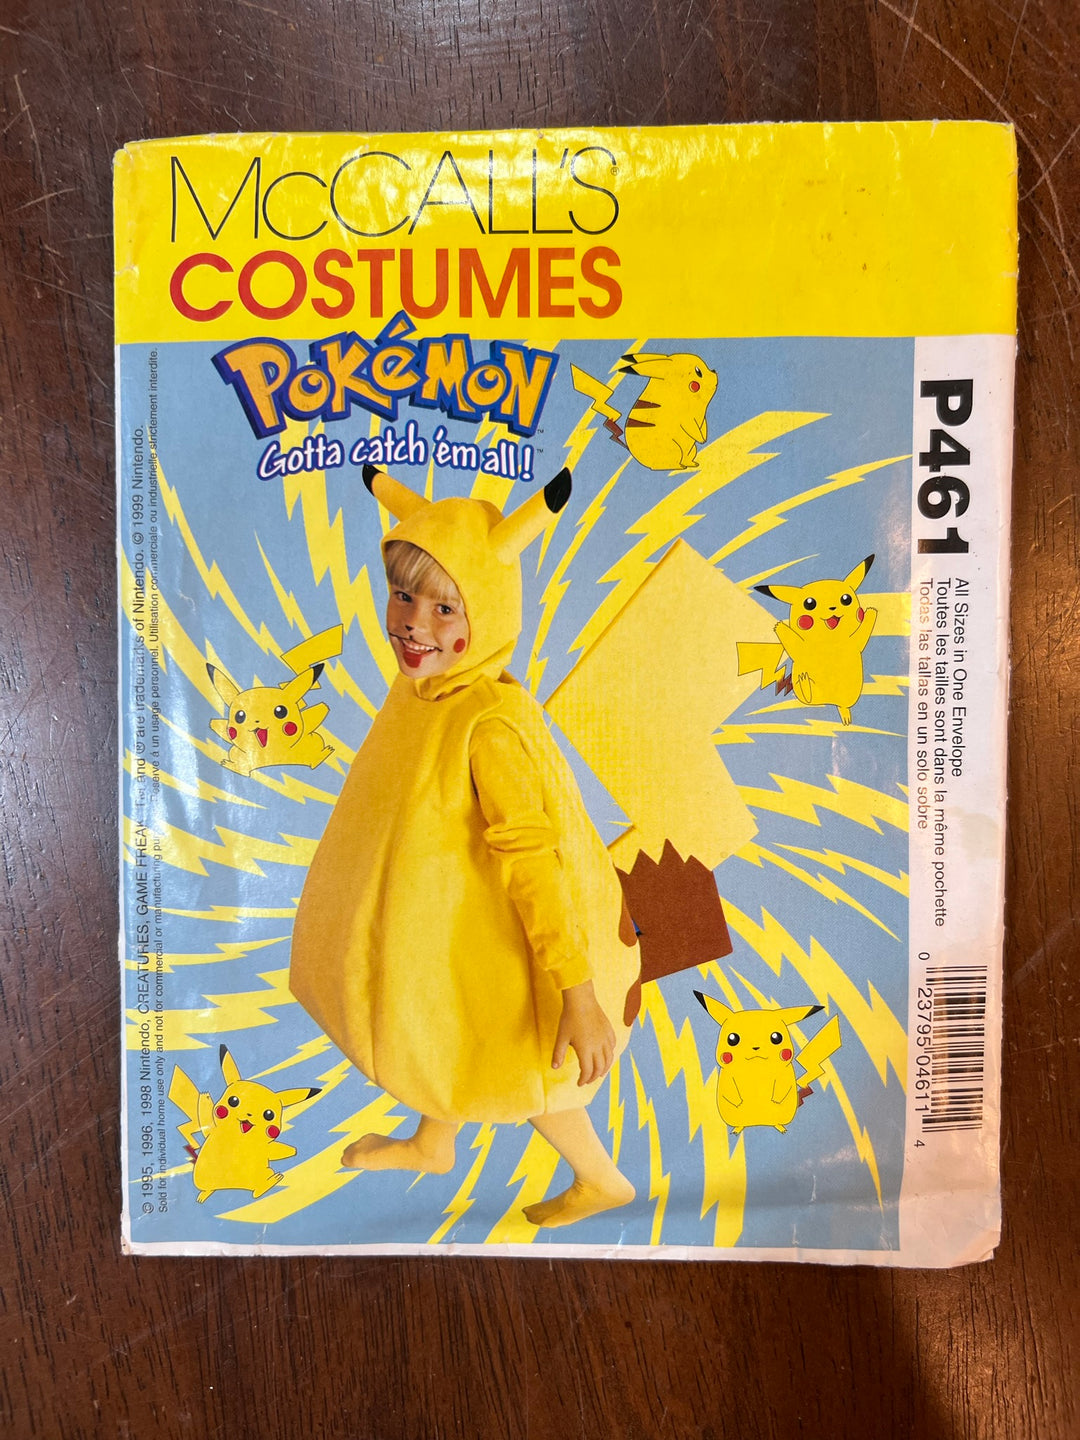 McCalls Costume Pokemon Pattern